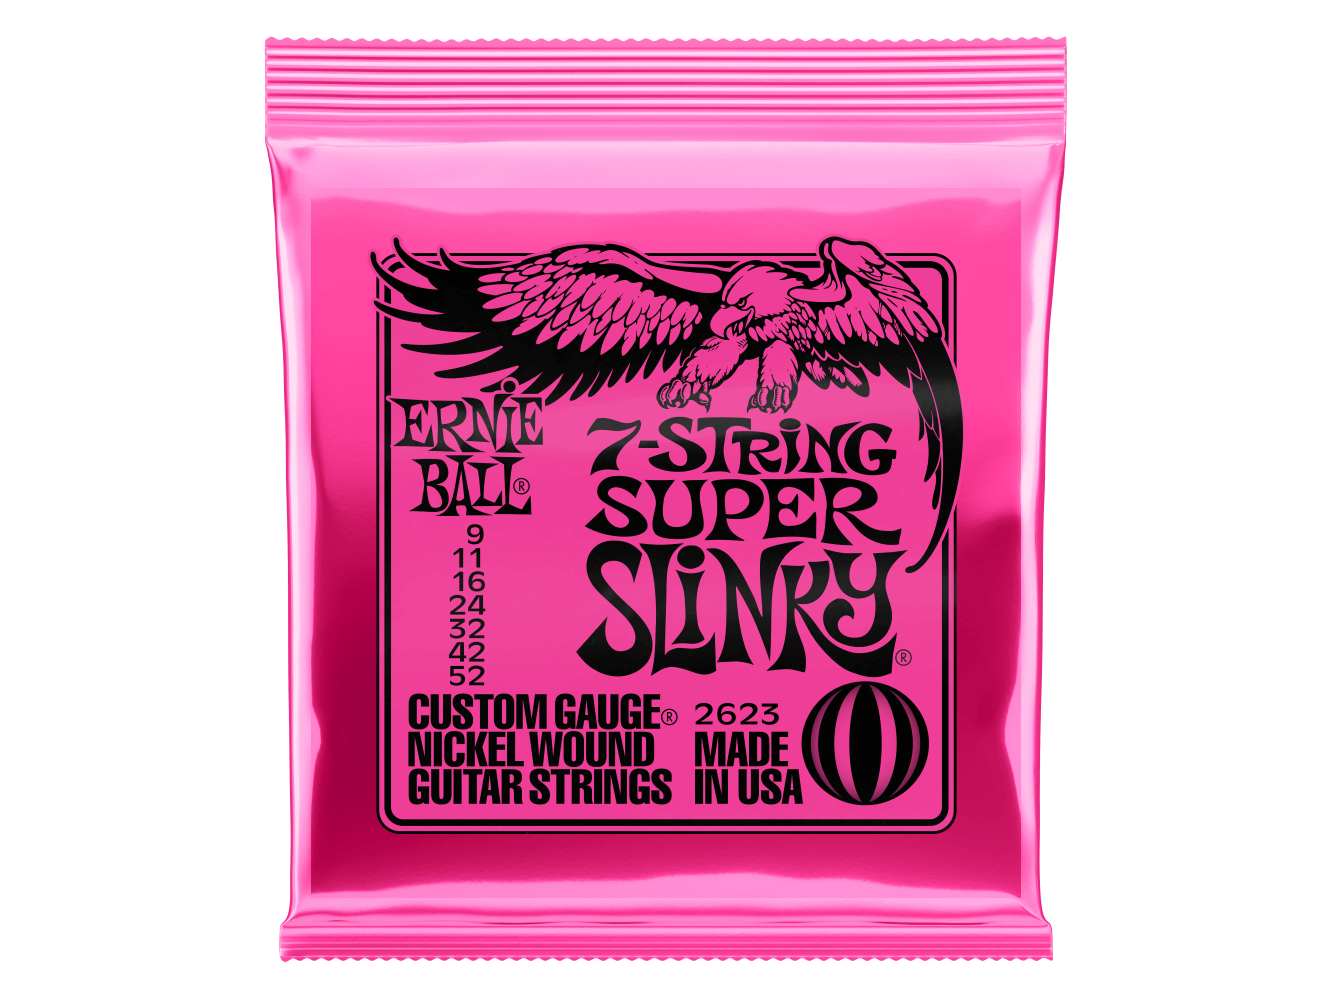 Ernie Ball 2623 Super Slinky 7-String Electric Guitar Strings 9-52